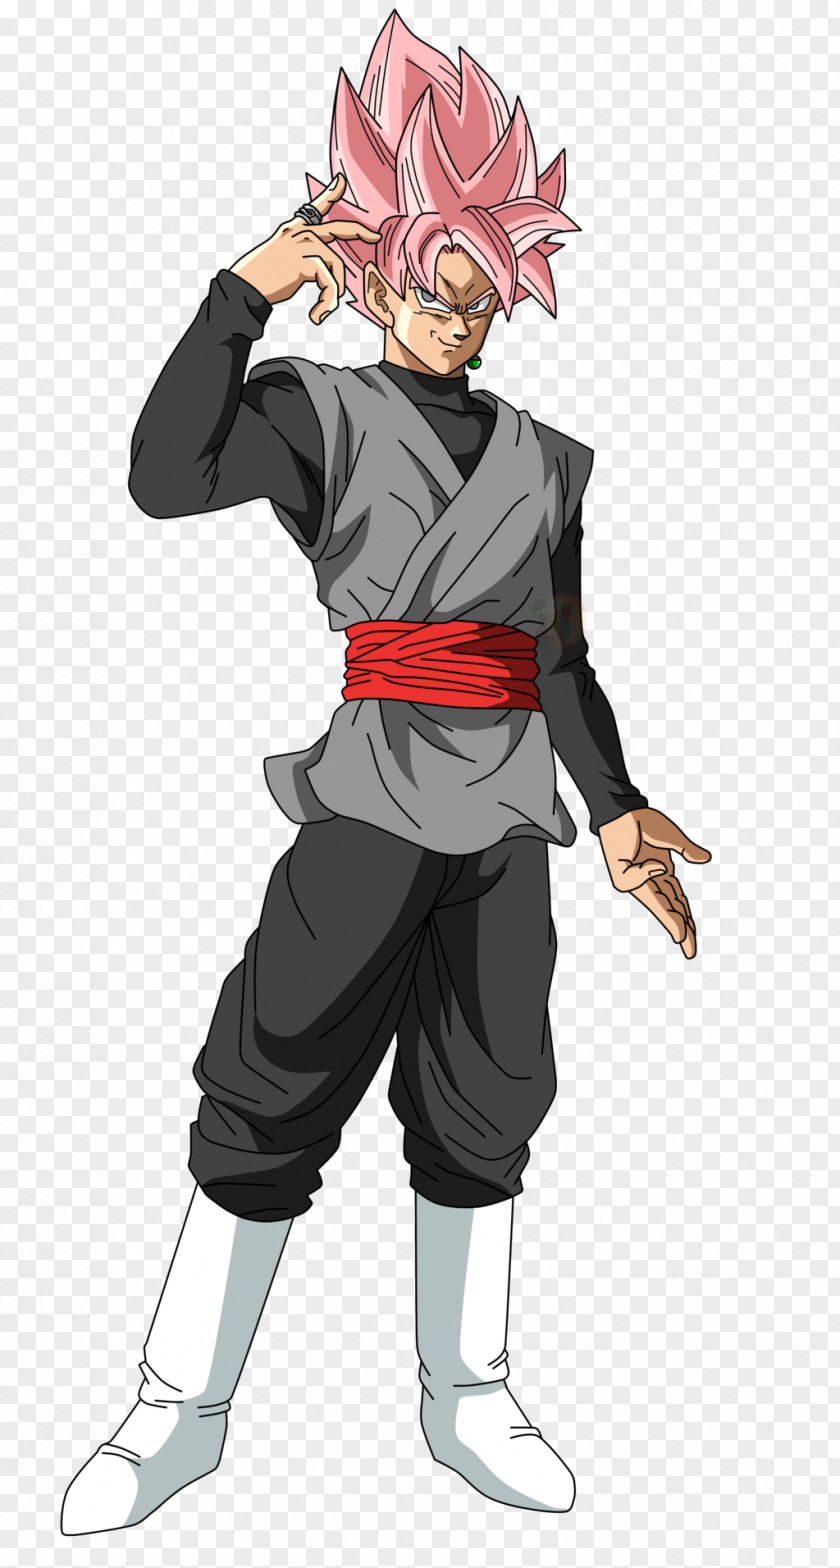 Black Goku Dragon Ball FighterZ Frieza Super Saiyan Master Roshi PNG